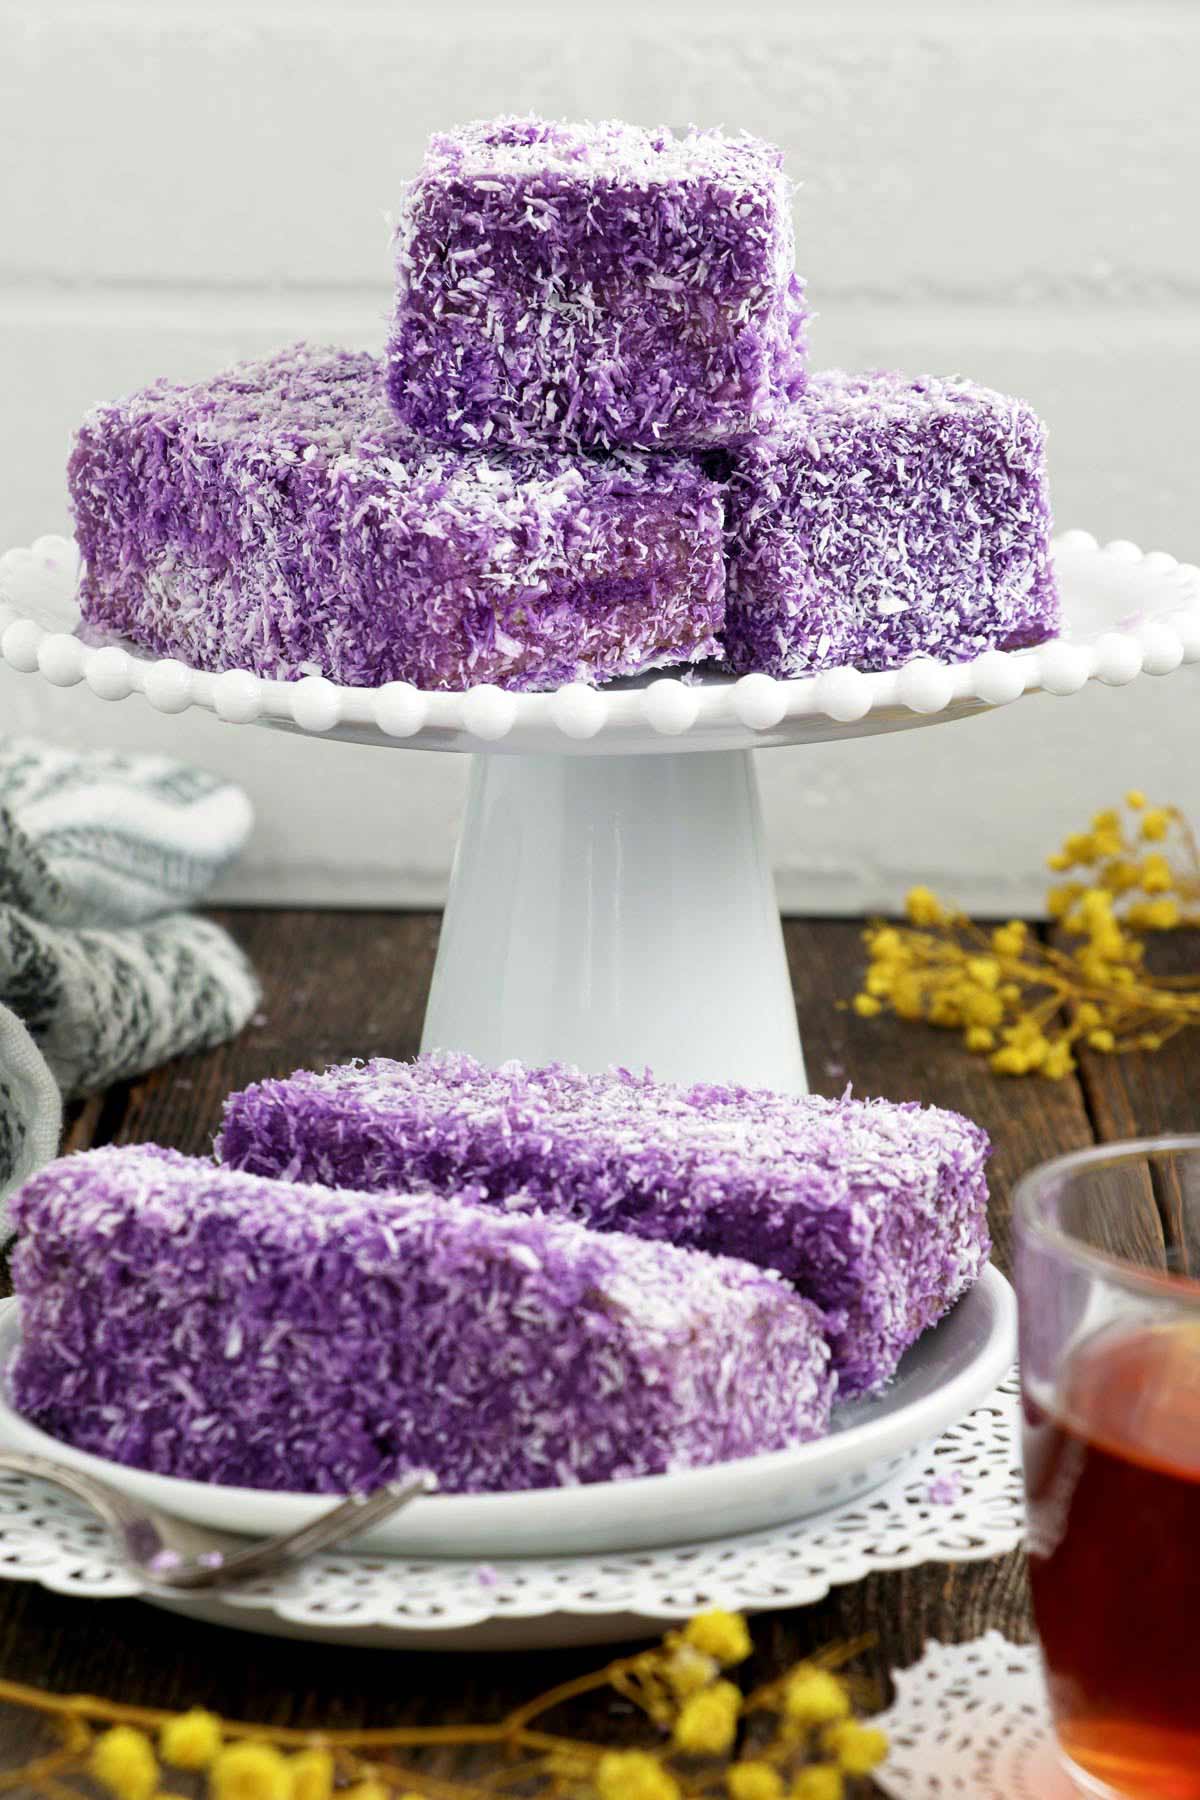 Homemade Ube bars are cake bars coated with purple yam glaze and coconut flakes.